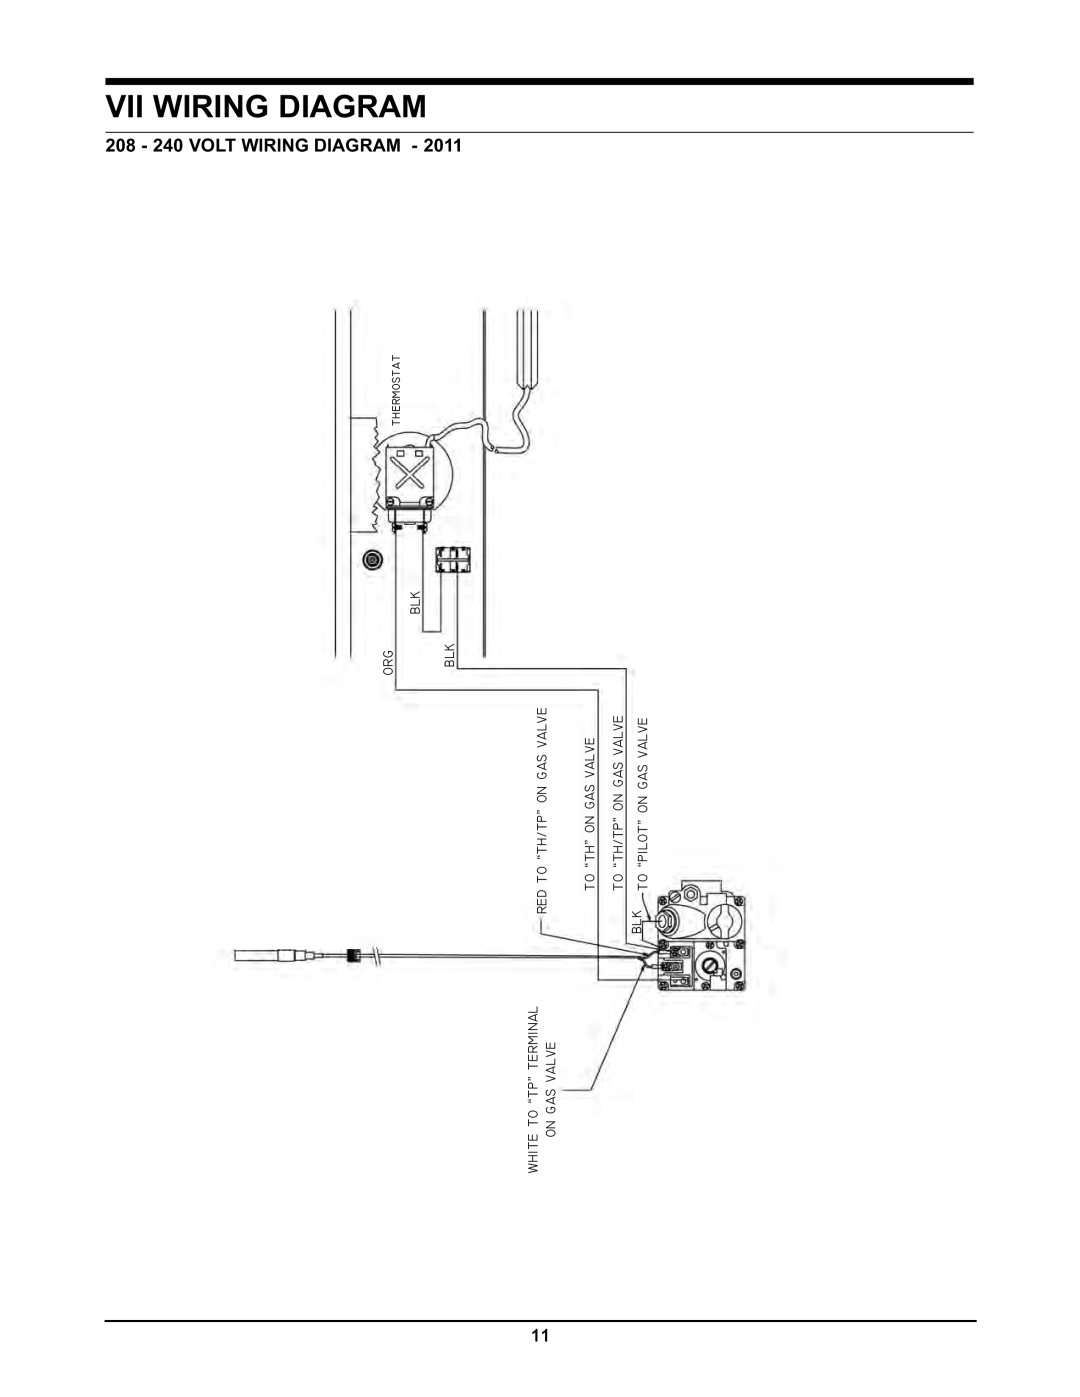 Keating Of Chicago Griddle Vii Wiring Diagram, 208 - 240 VOLT WIRING DIAGRAM, To ˆpilot˜ On Gas Valve, Valvegasonˆth˜To 